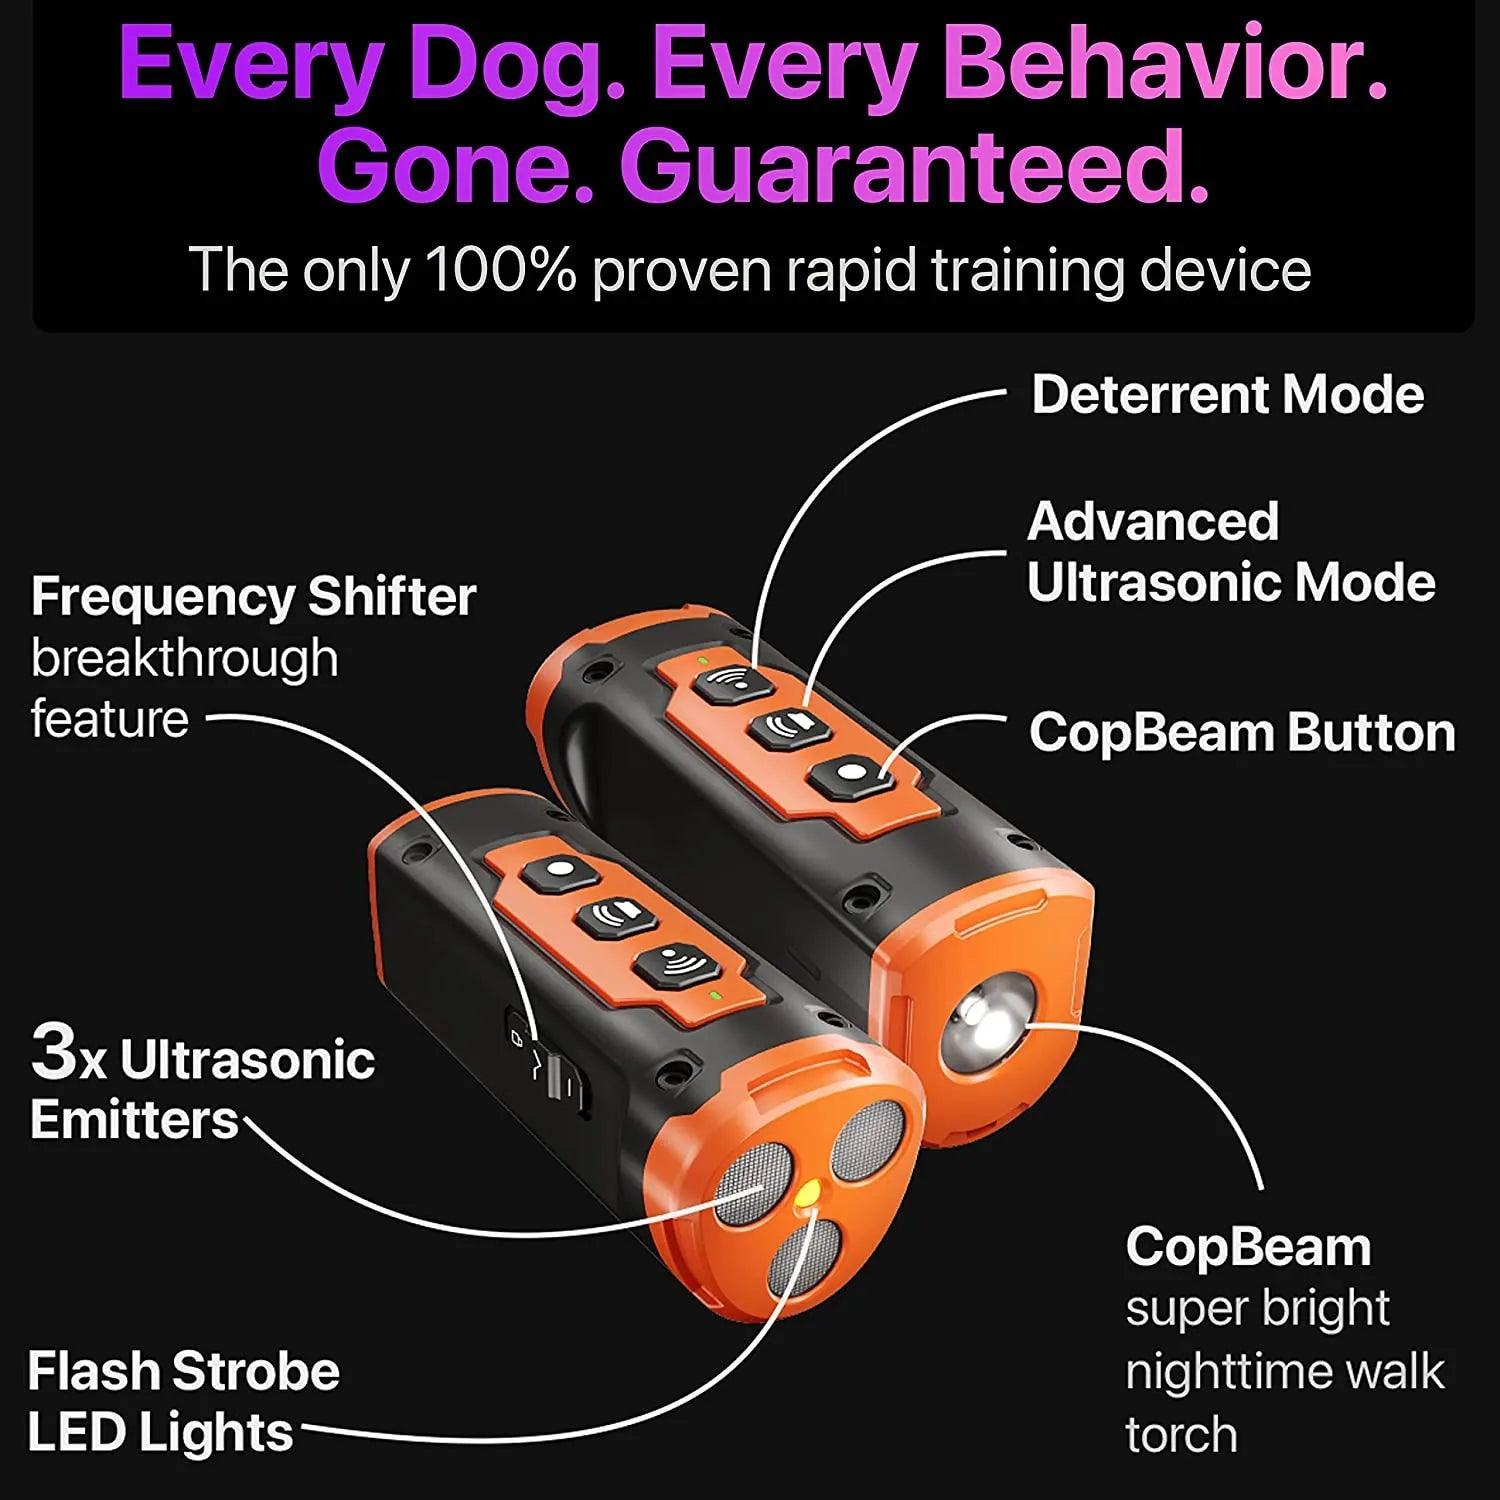 Ultrasonic Pet Training Device with LED Flashlight for Dog Behavior Control  ourlum.com   